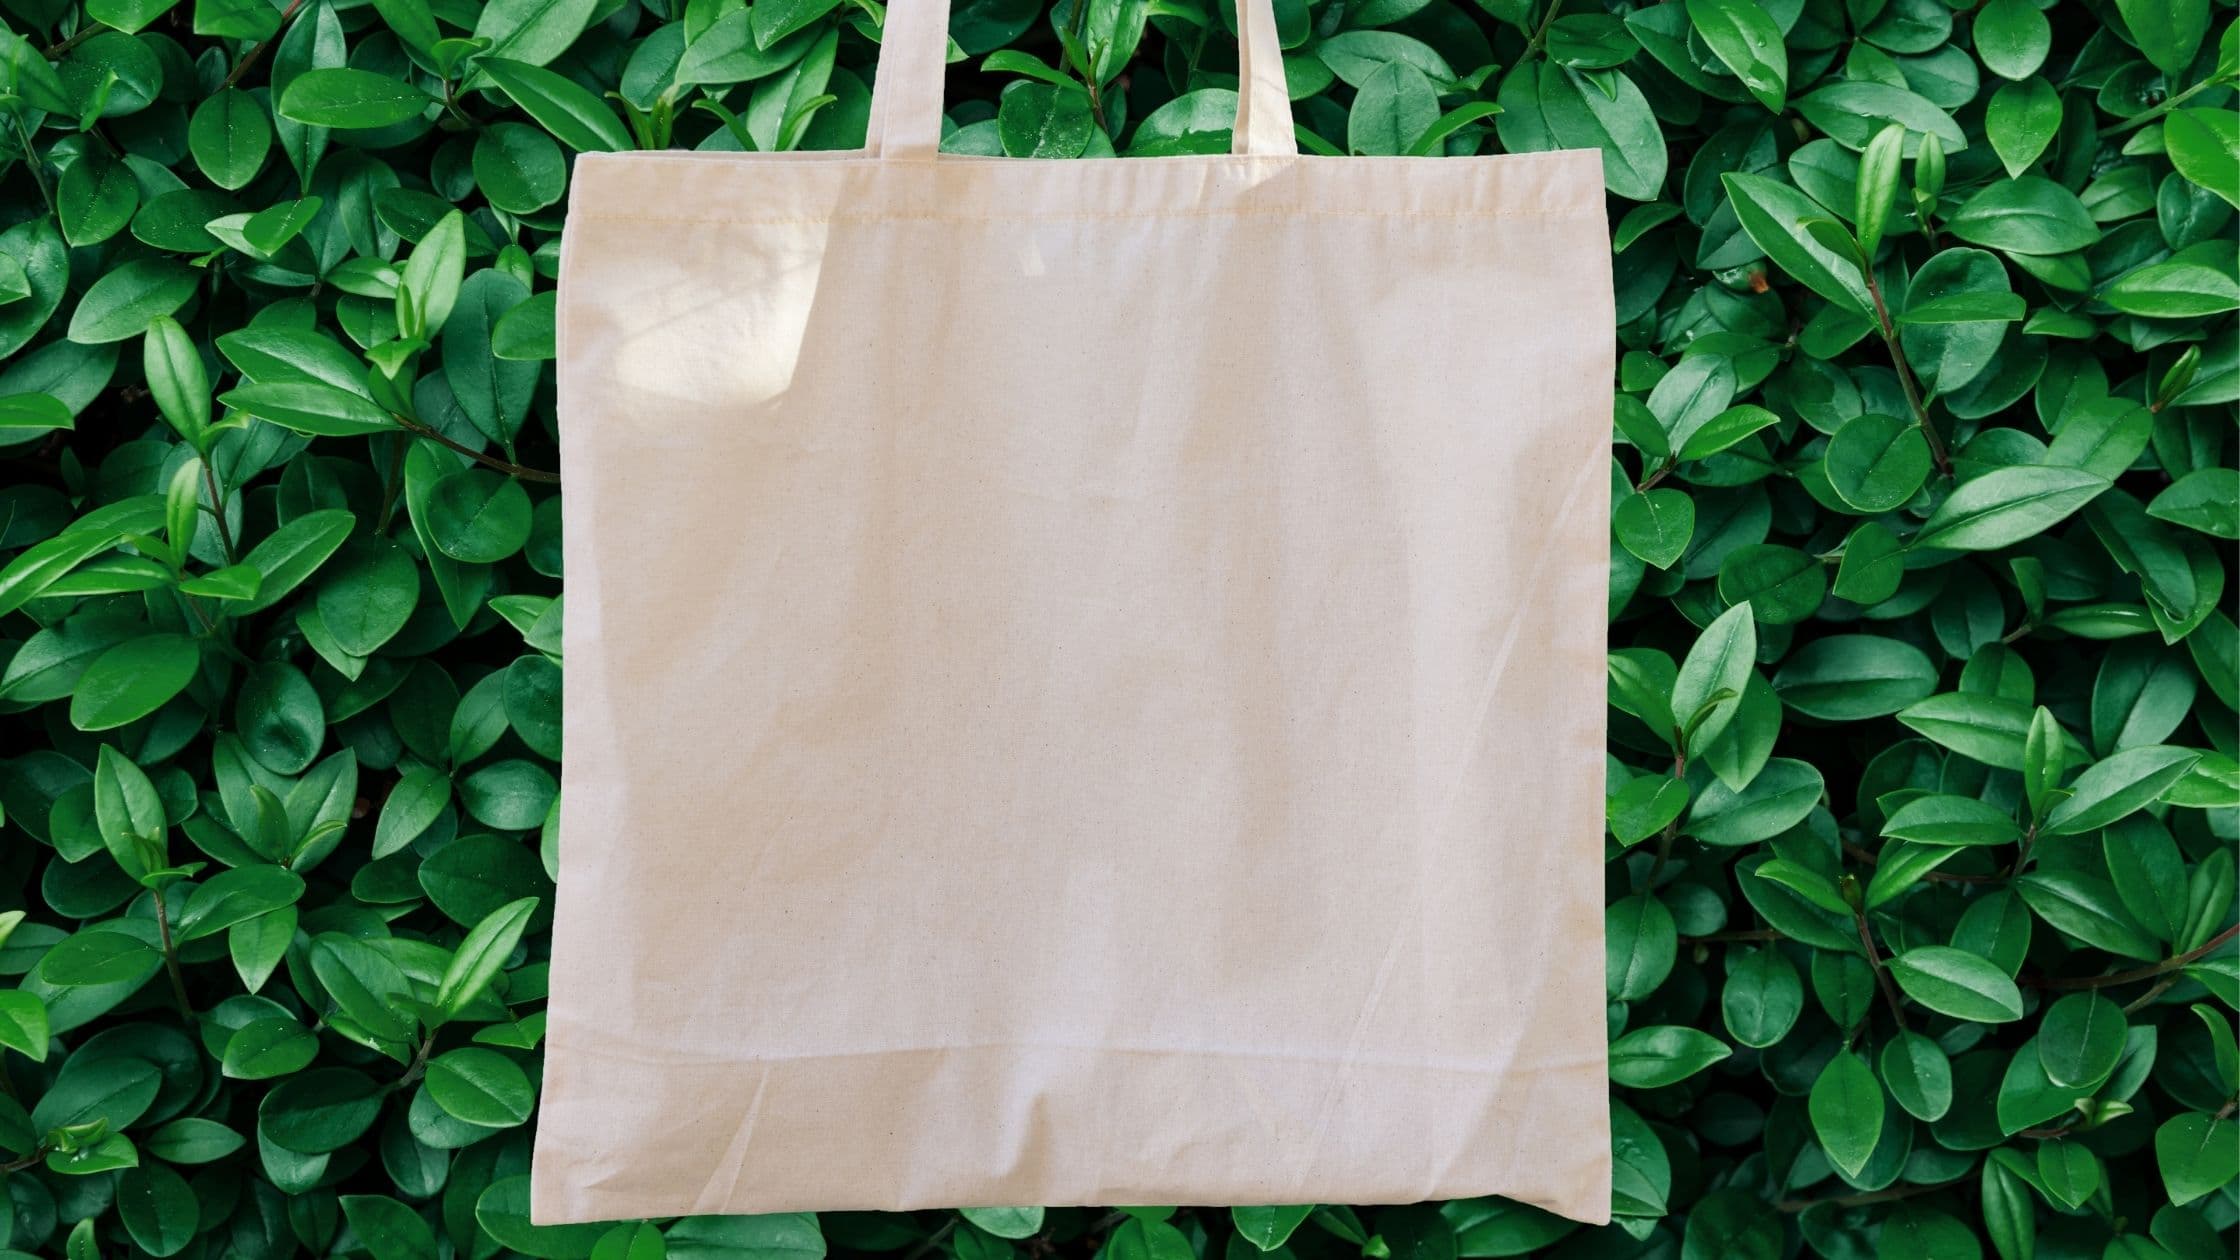 Go Green Economy Tote Bag